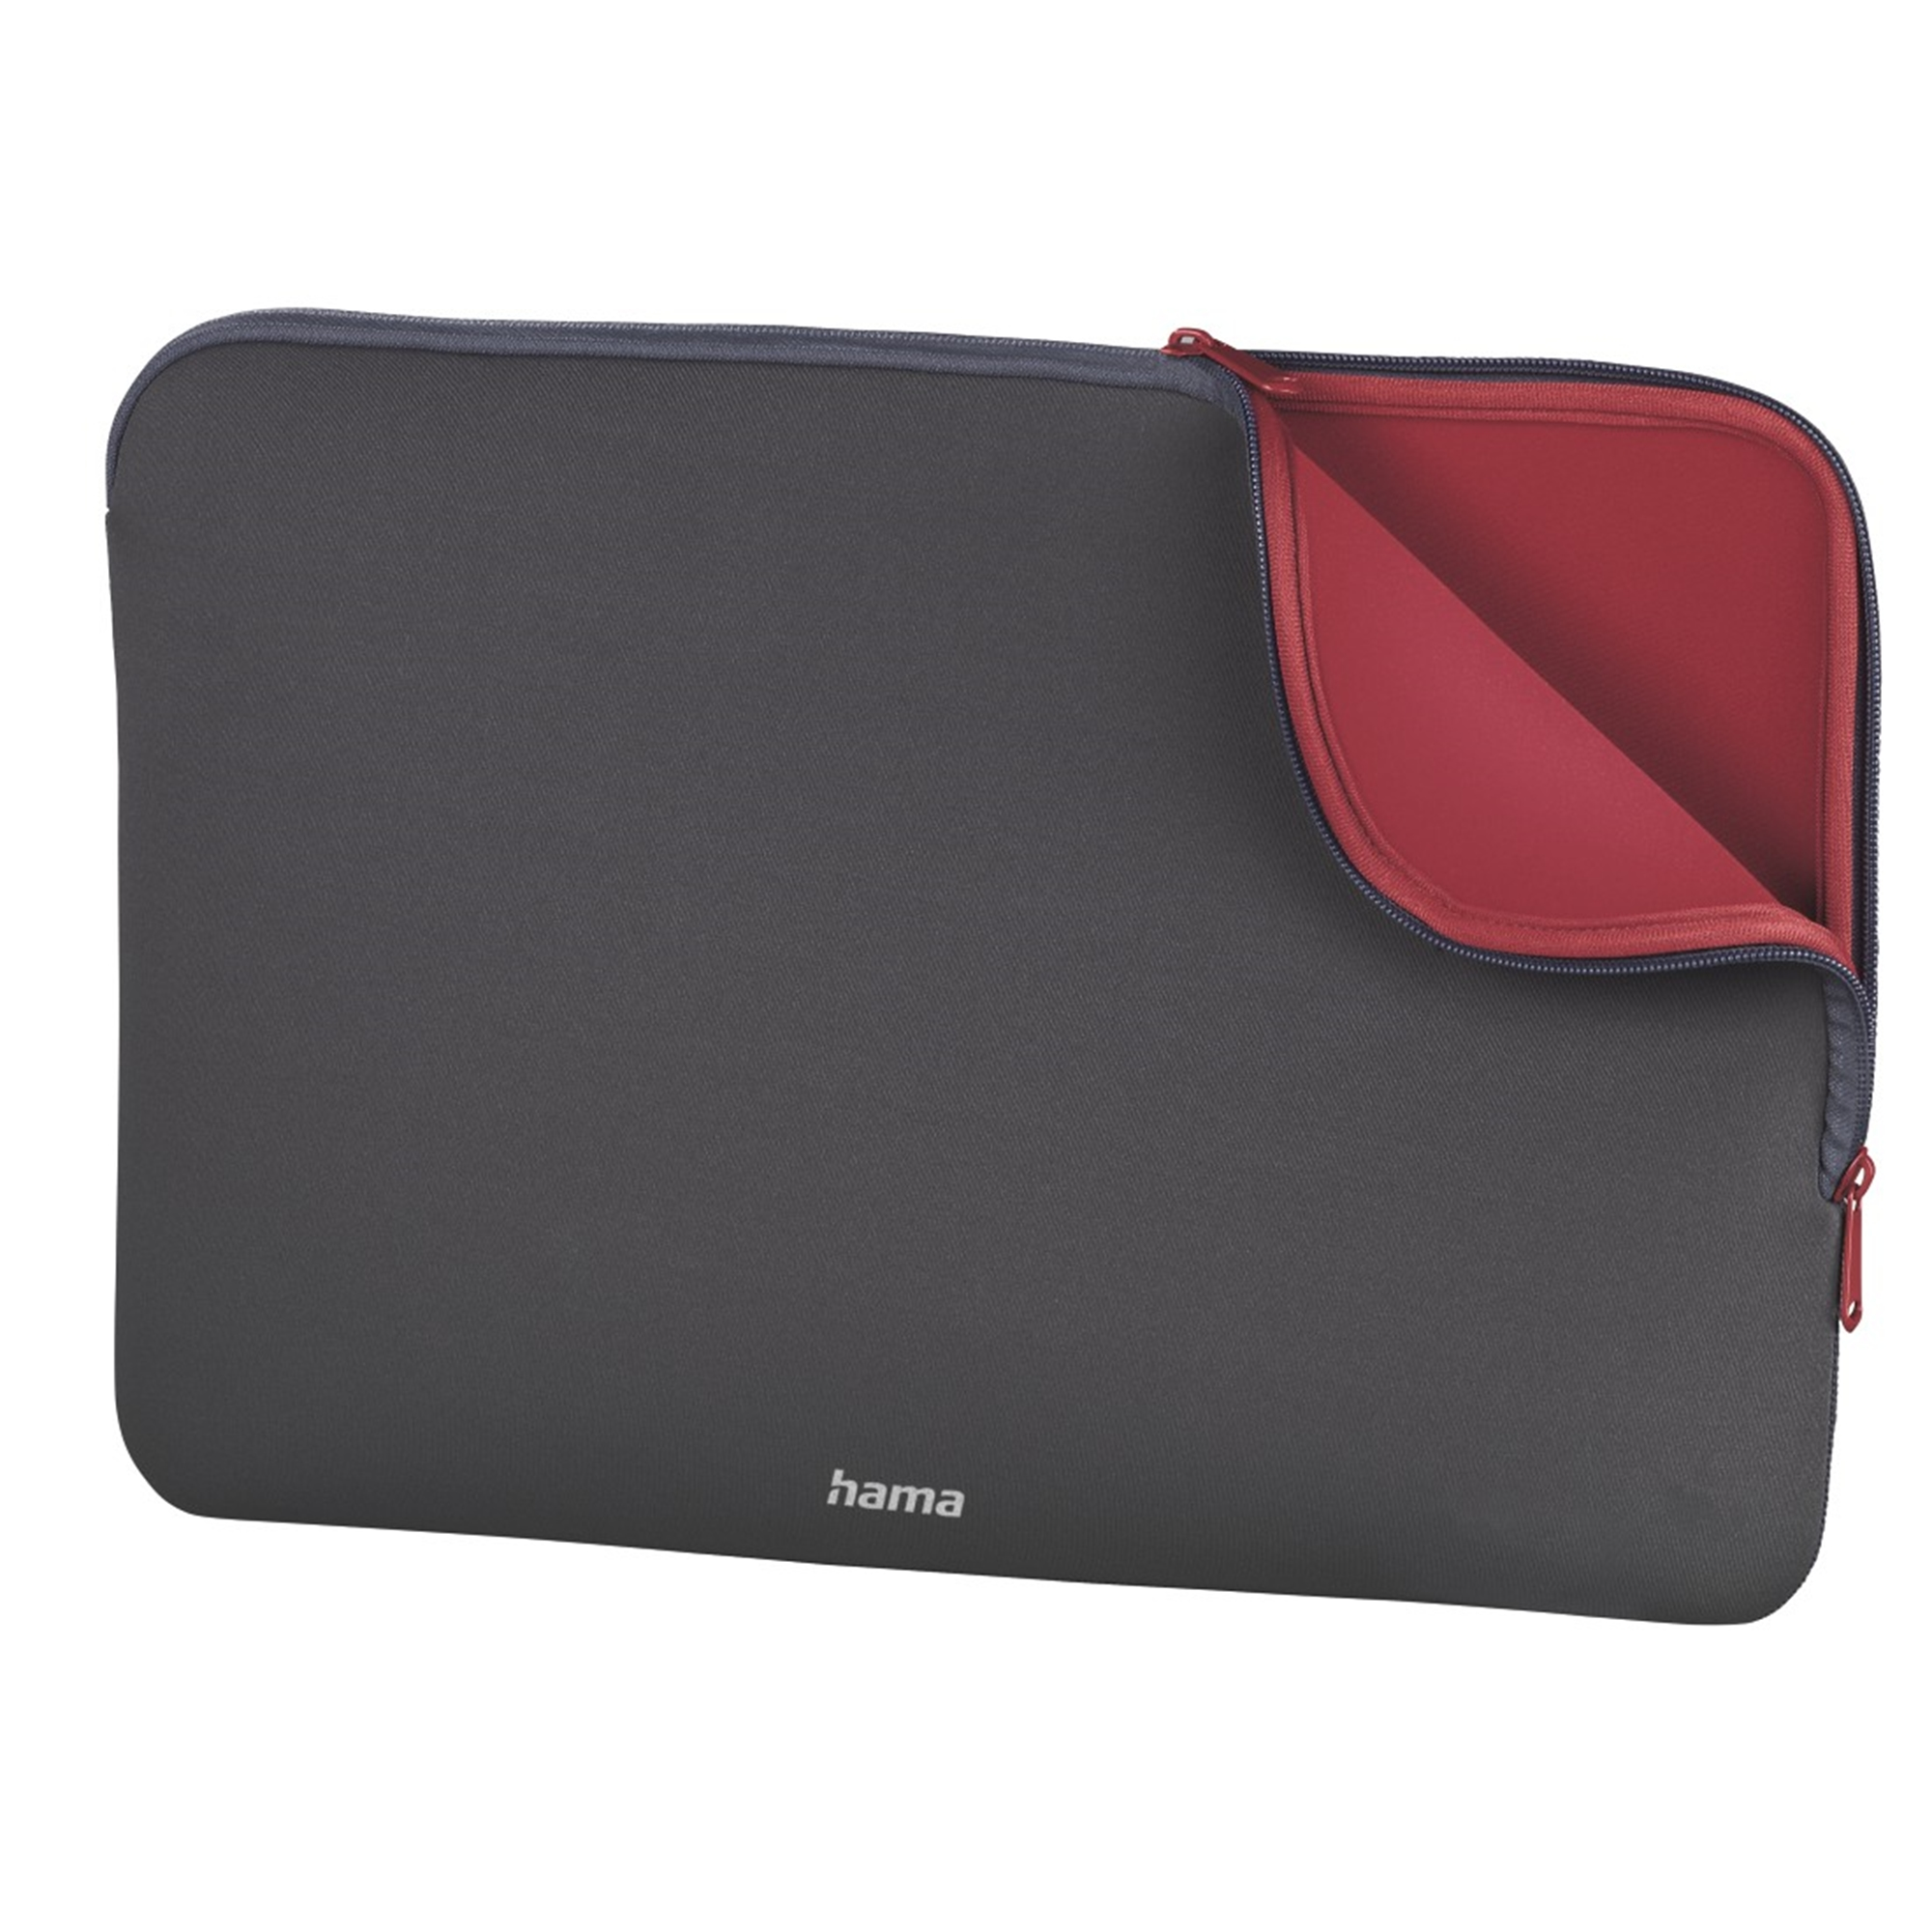 Neopren, Universell Grau Notebook Neoprene sleeve Sleeve HAMA für